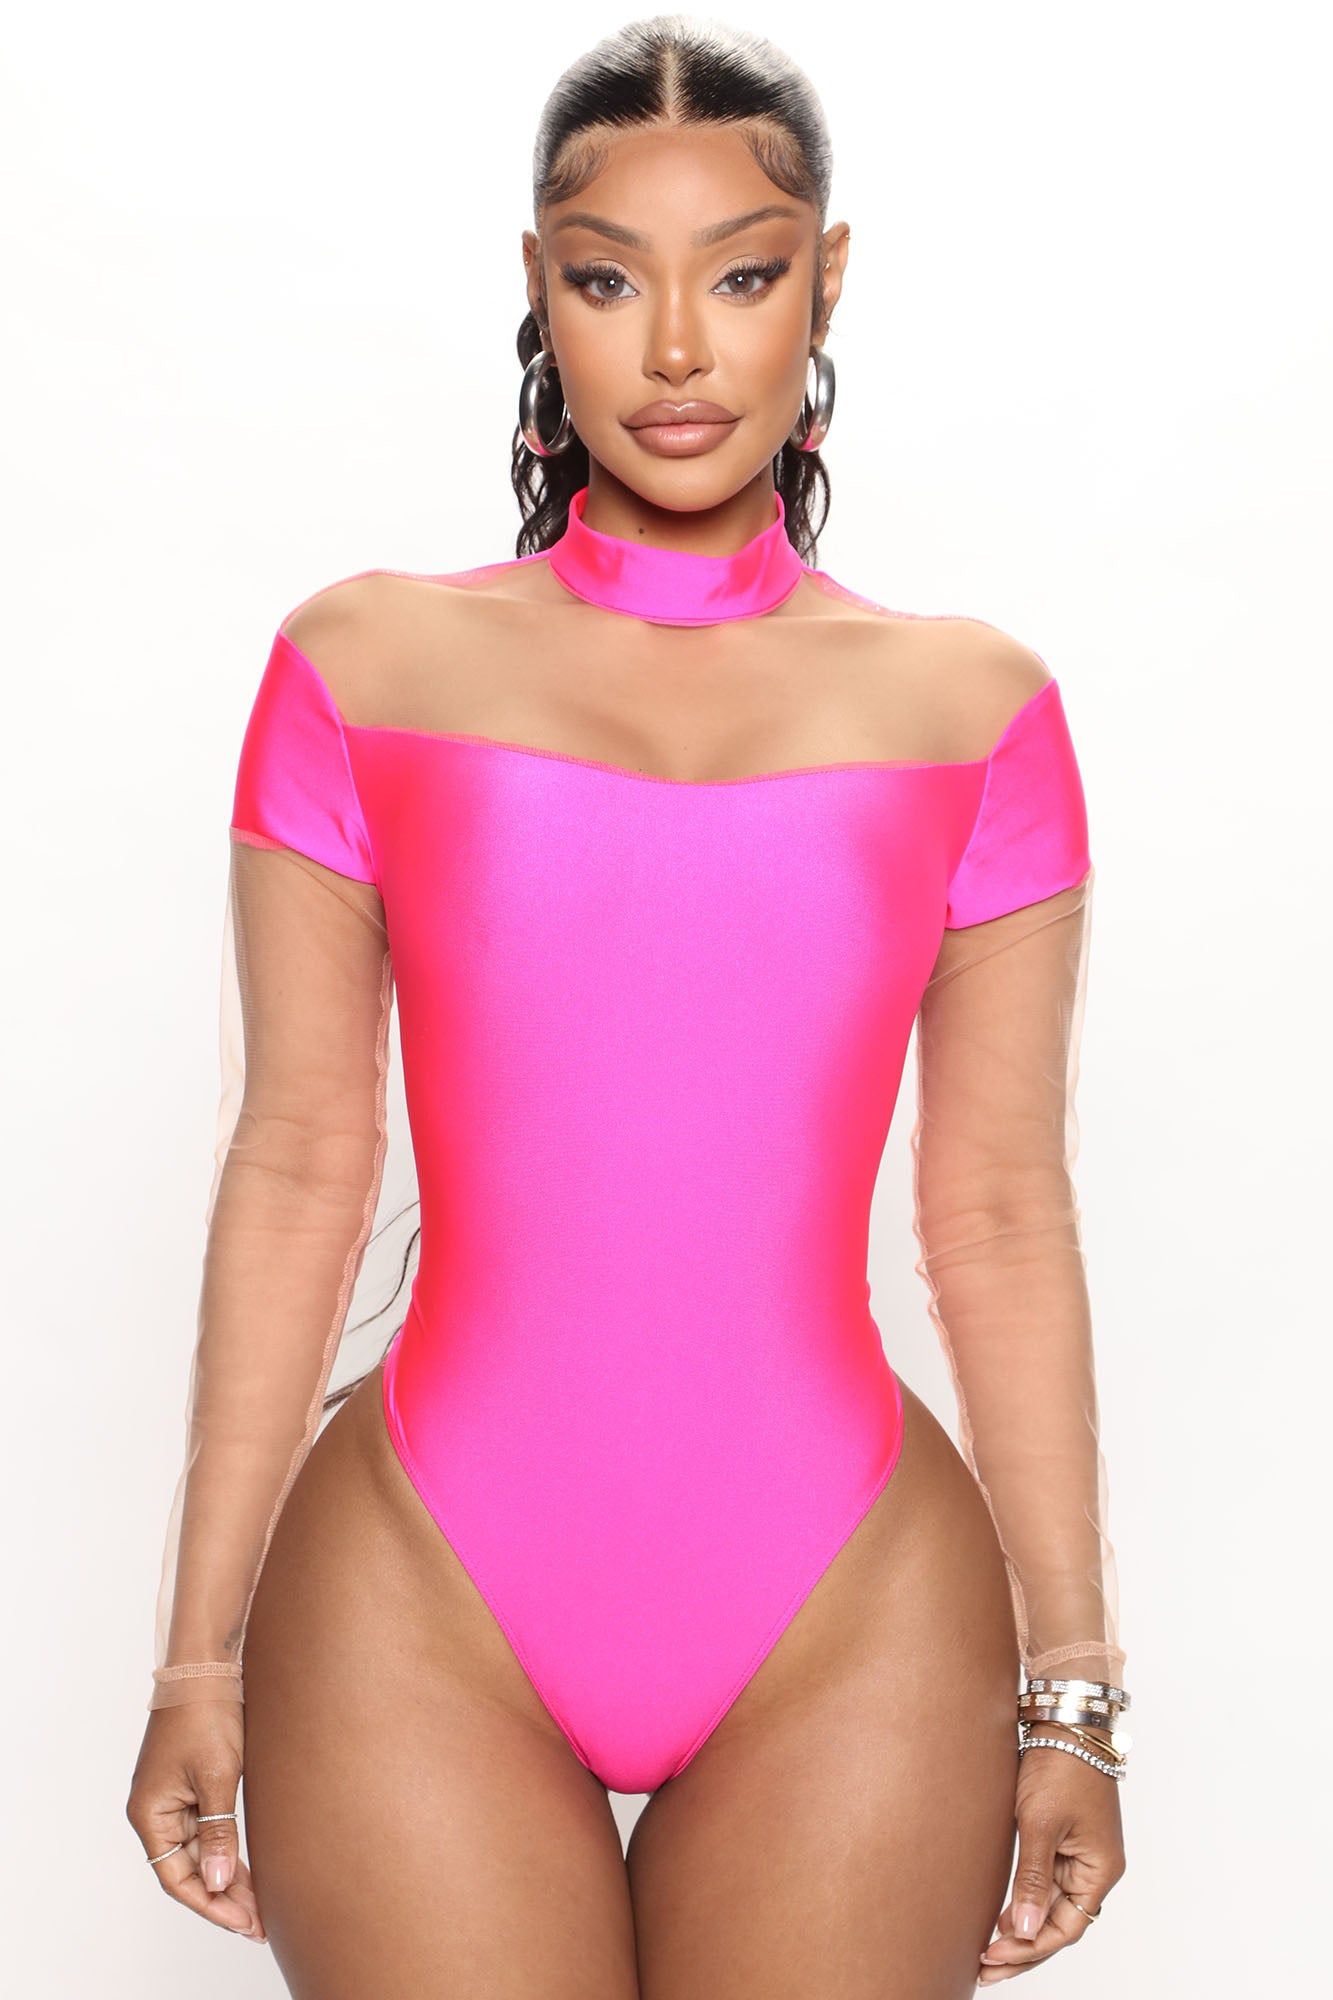 Cute pink bodysuit is now available #bodysuit #viralbodysuit